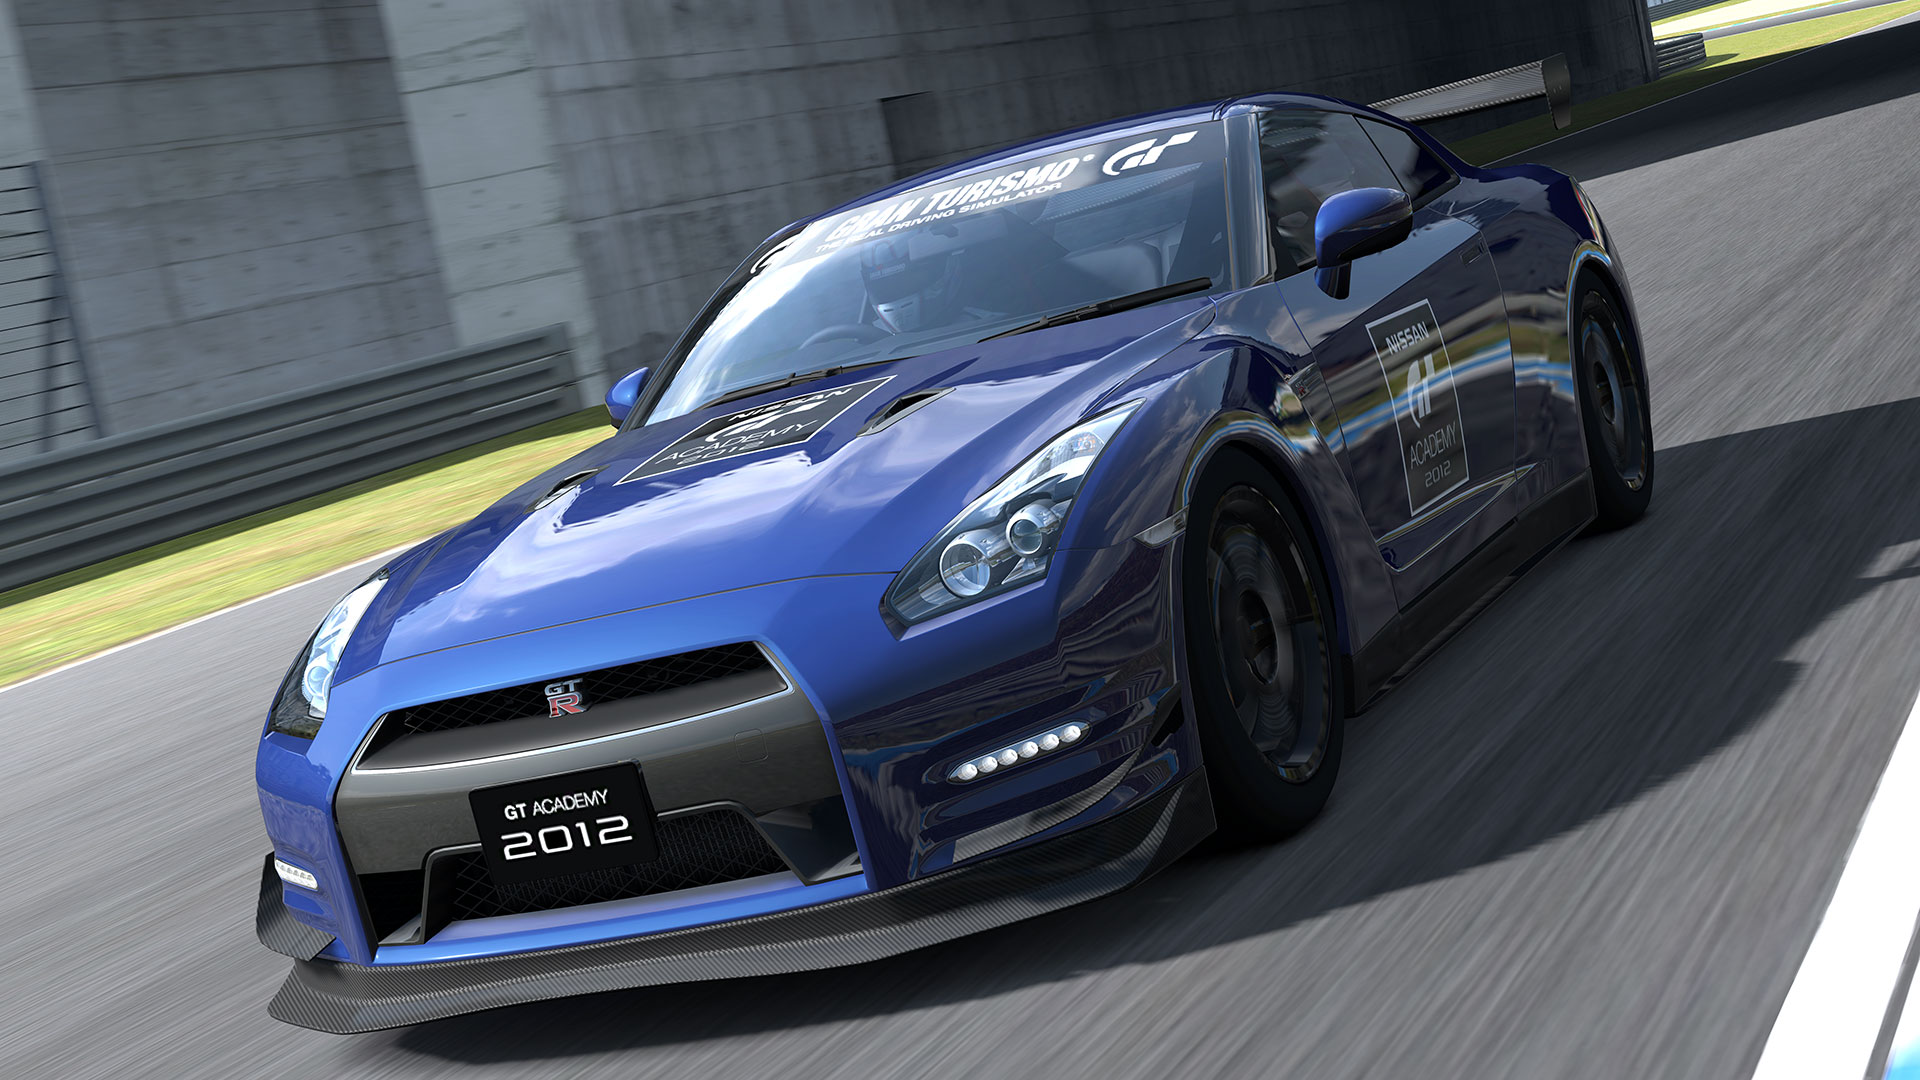 Nissan Sports Cars & Gran Turismo 5 - GT Academy